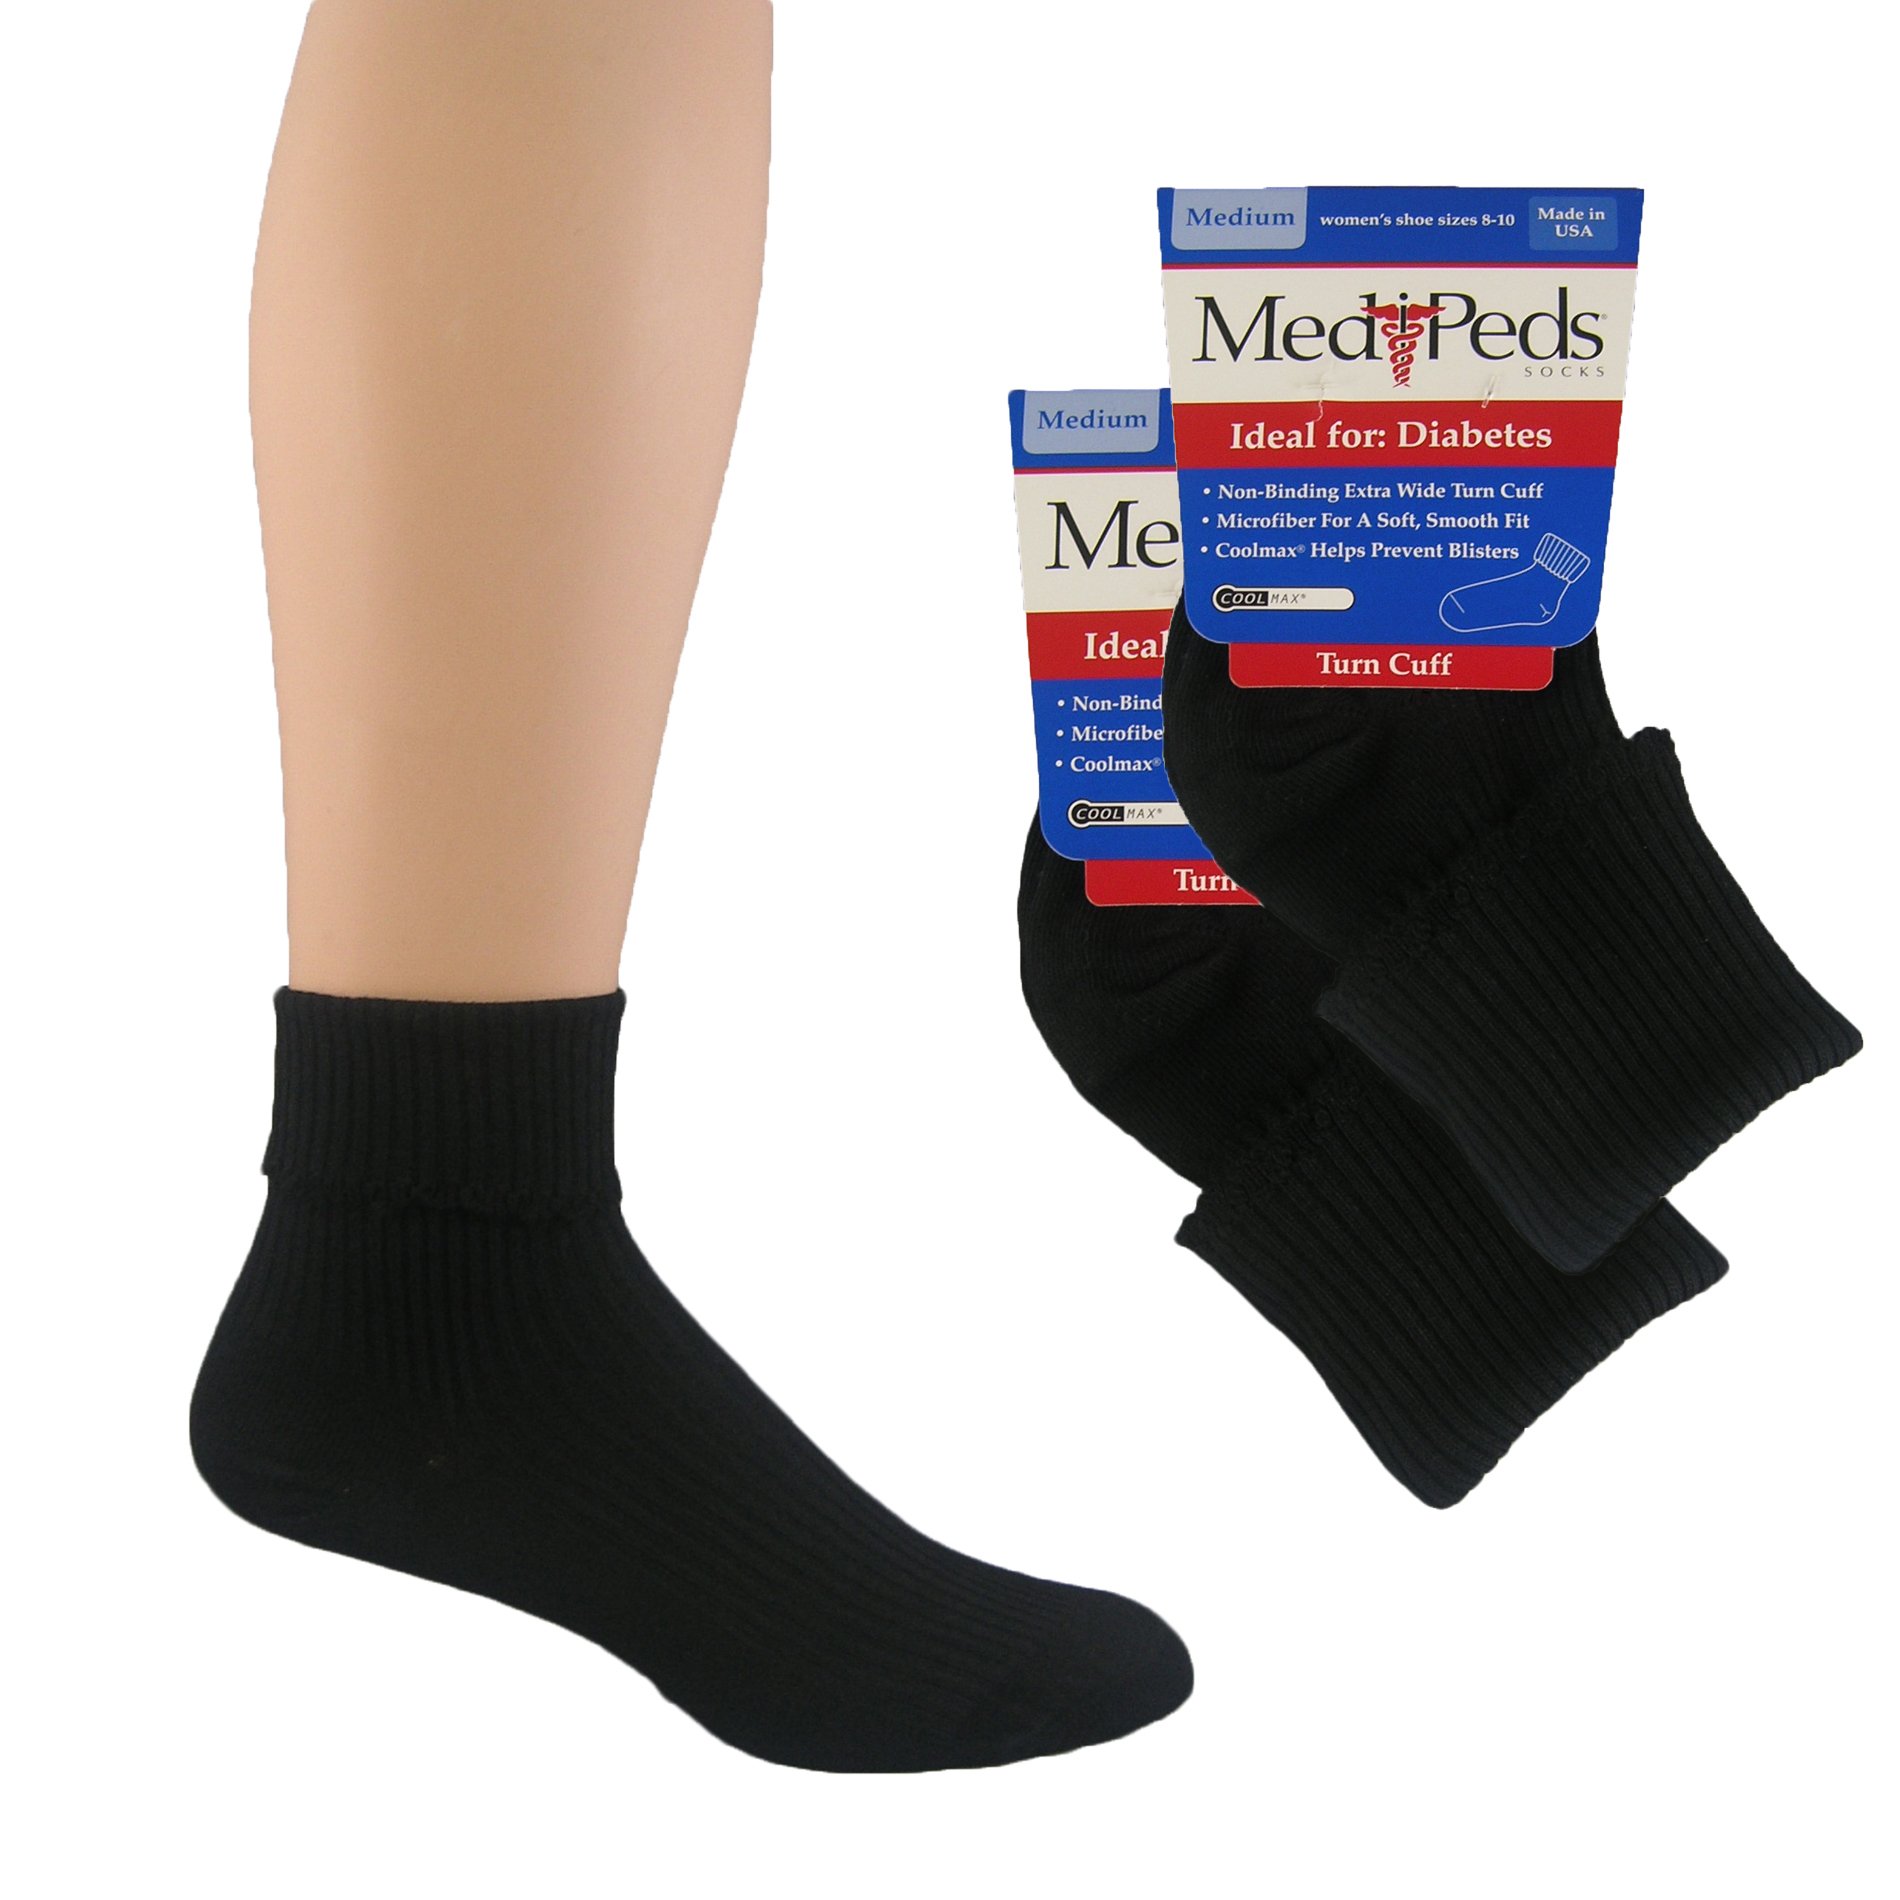 MediPeds Women's Diabetic Crew or Turn Cuff Socks - 2pr